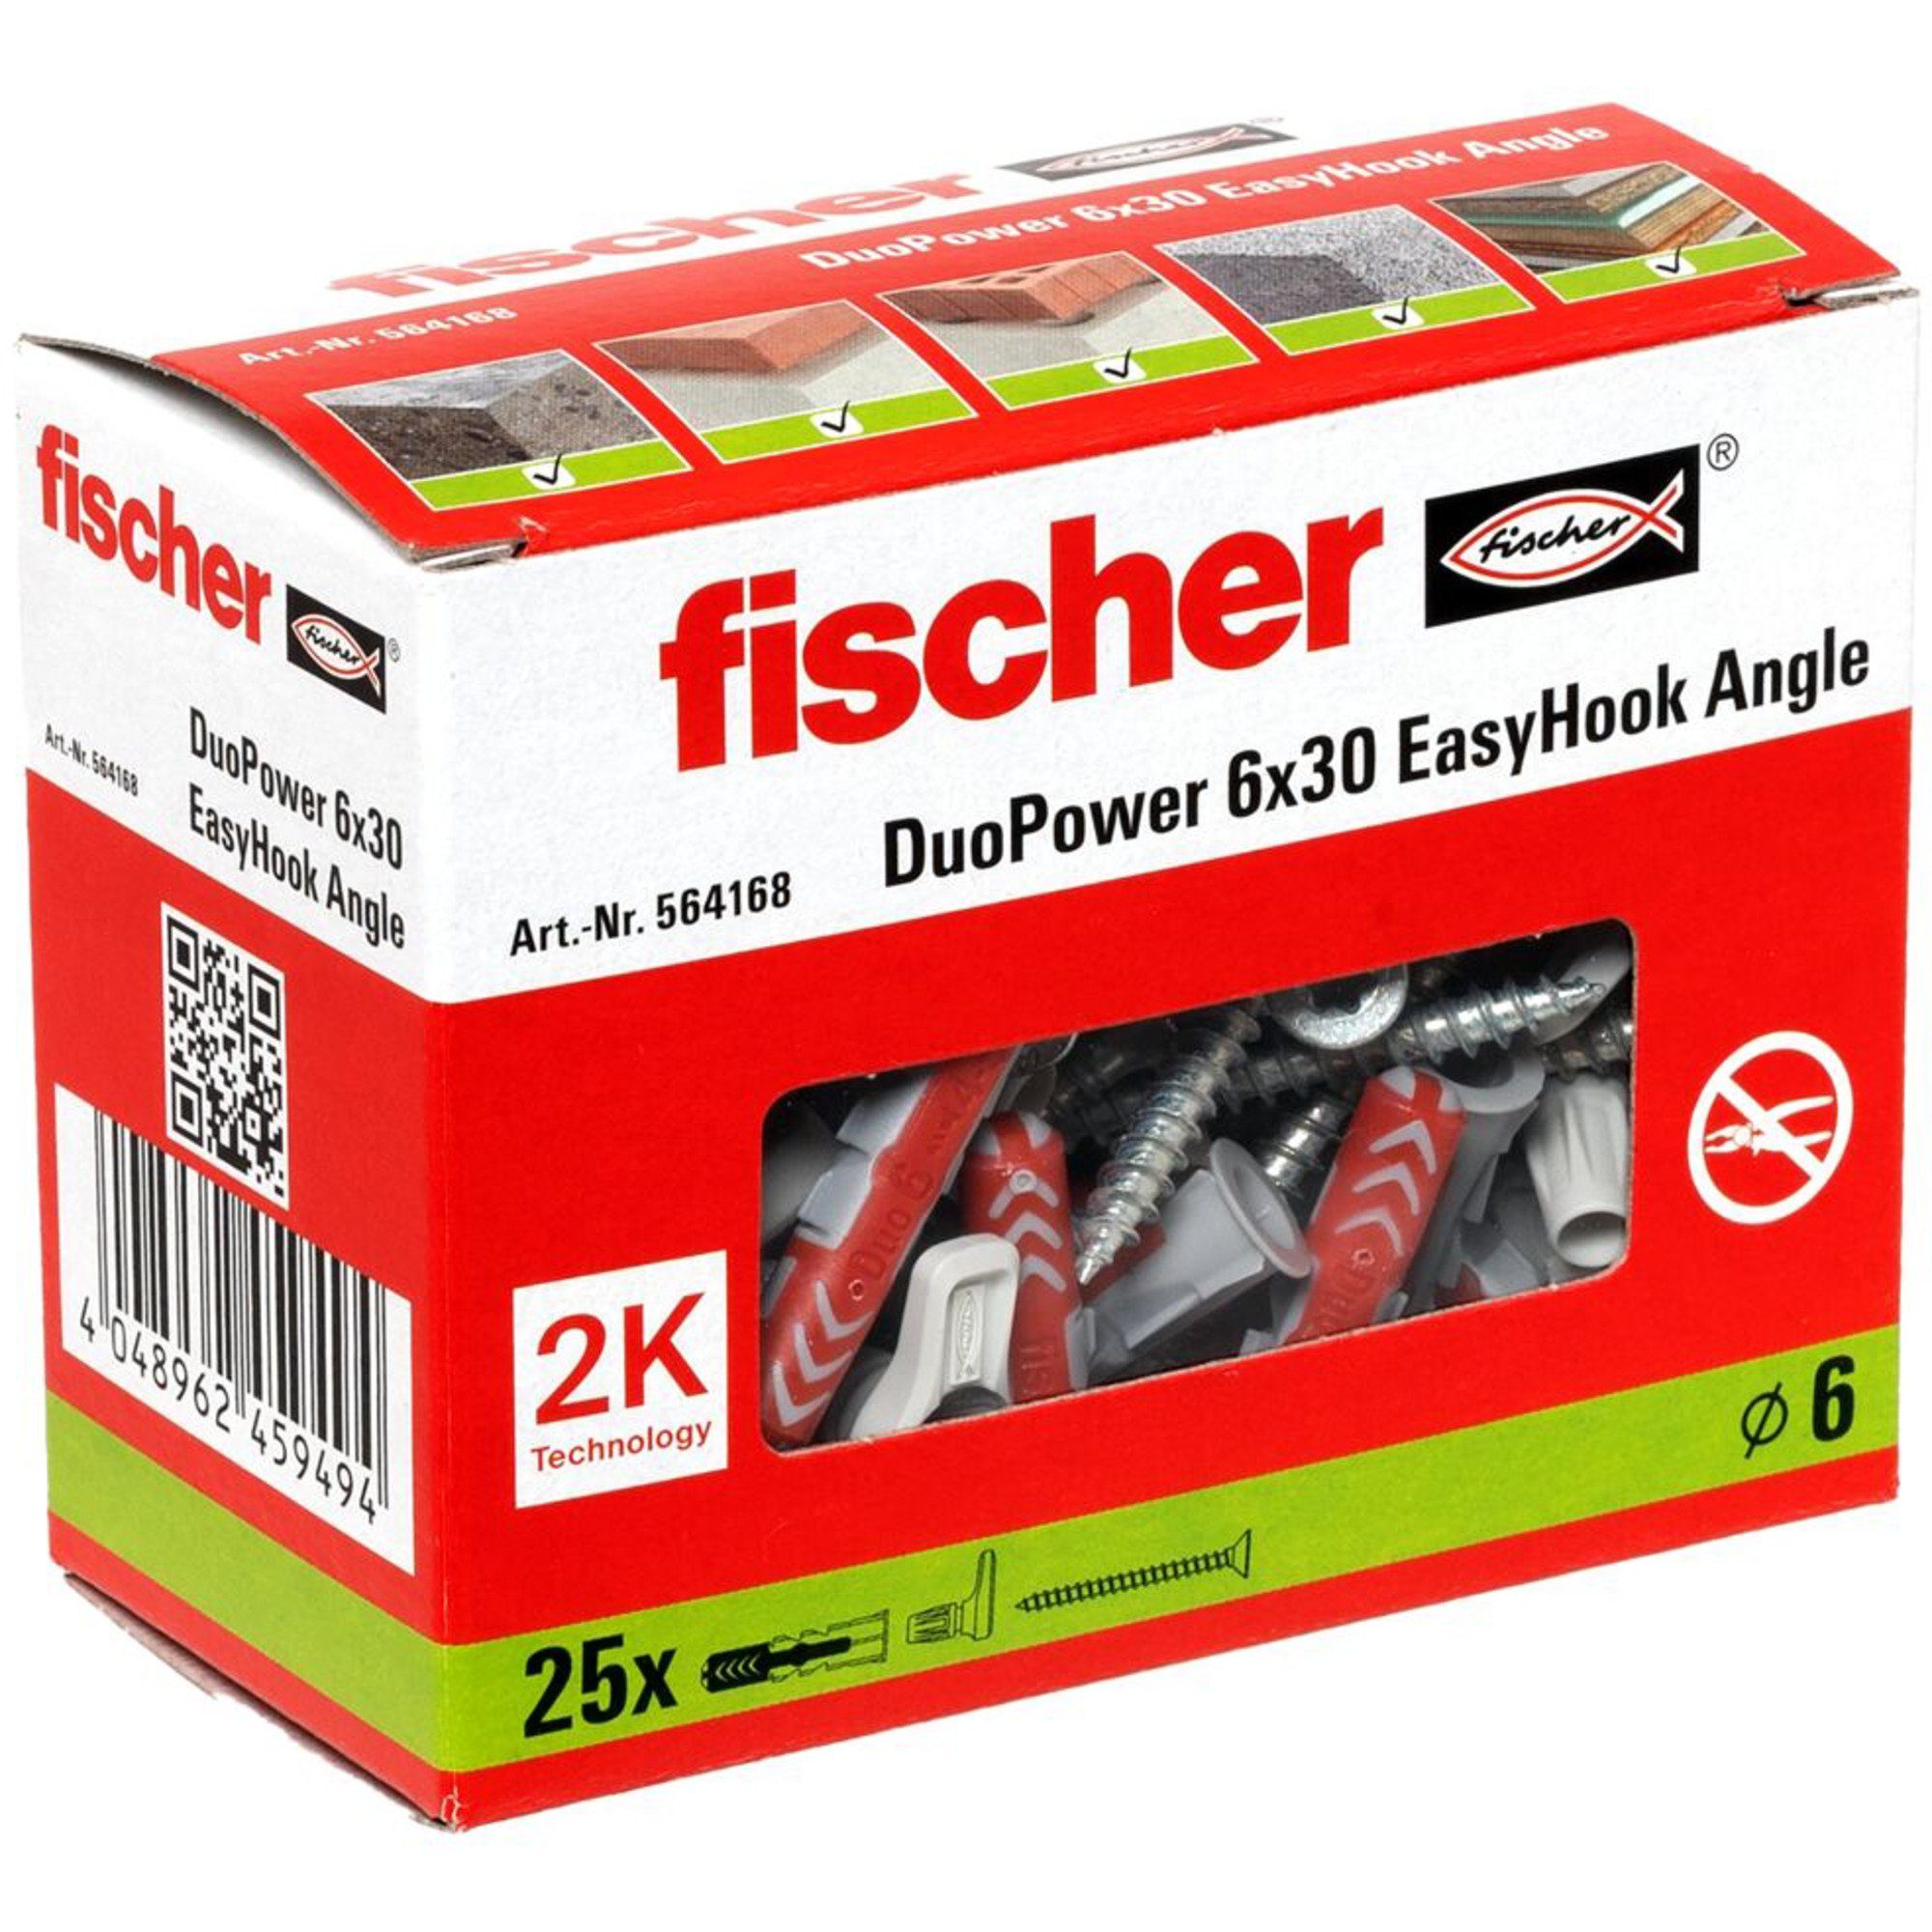 Exquisites Design Fischer Universaldübel fischer Dübel, Angle EasyHook DuoPower 6x30, (25